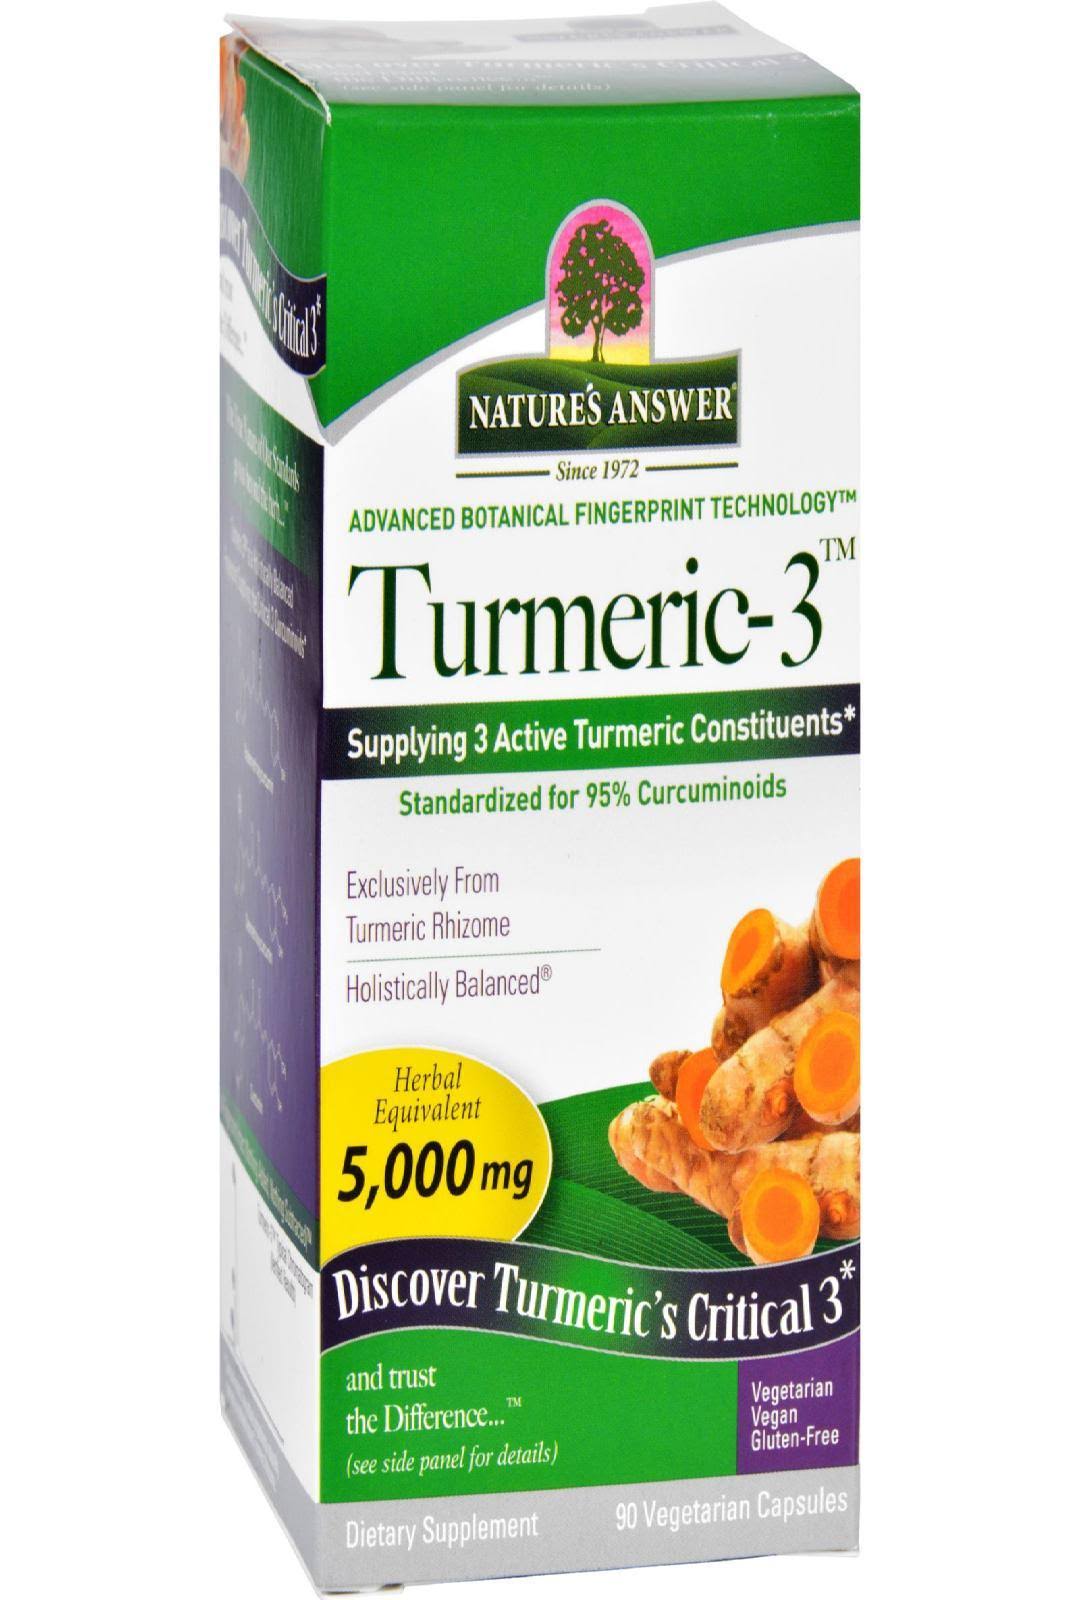 Nature's Answer Turmeric-3 Supplement - 90 Vegetarian Capsules